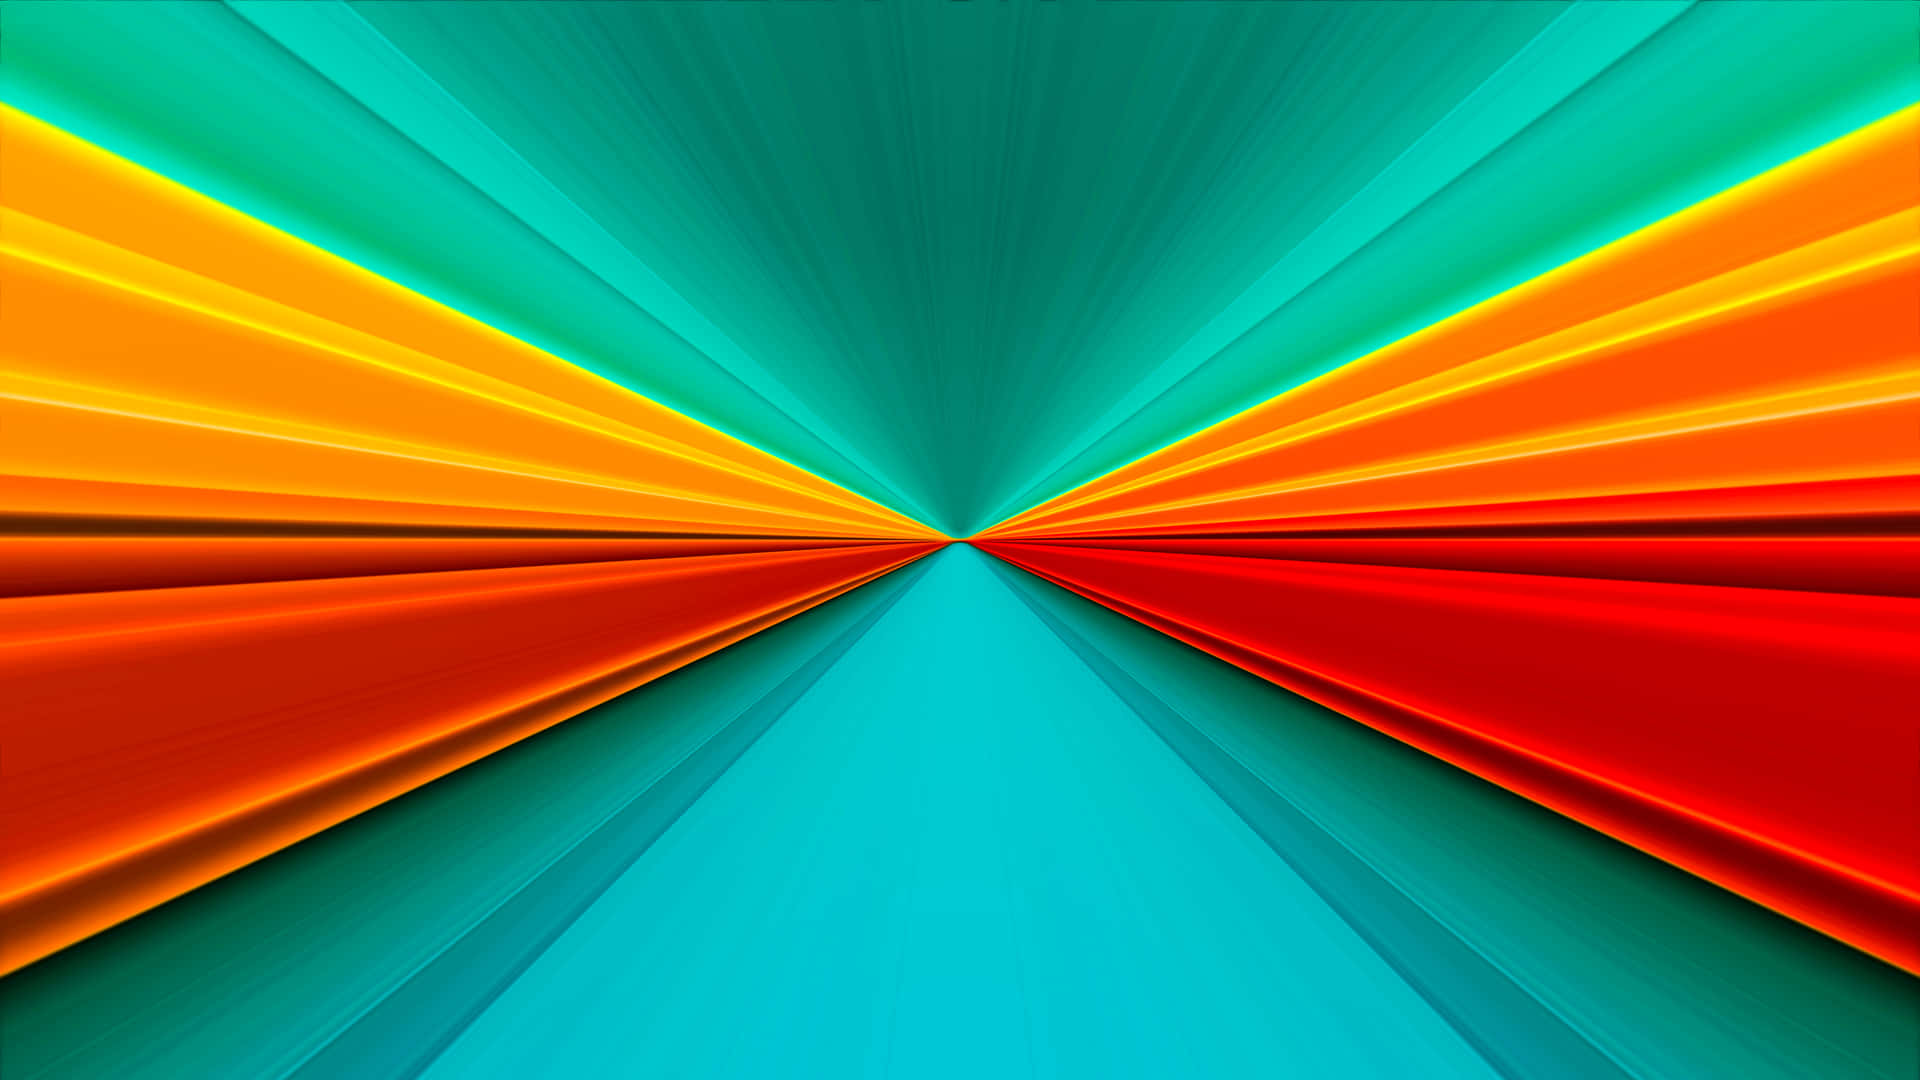 Unfondo Abstracto Y Colorido Con Un Arco Iris De Colores Fondo de pantalla